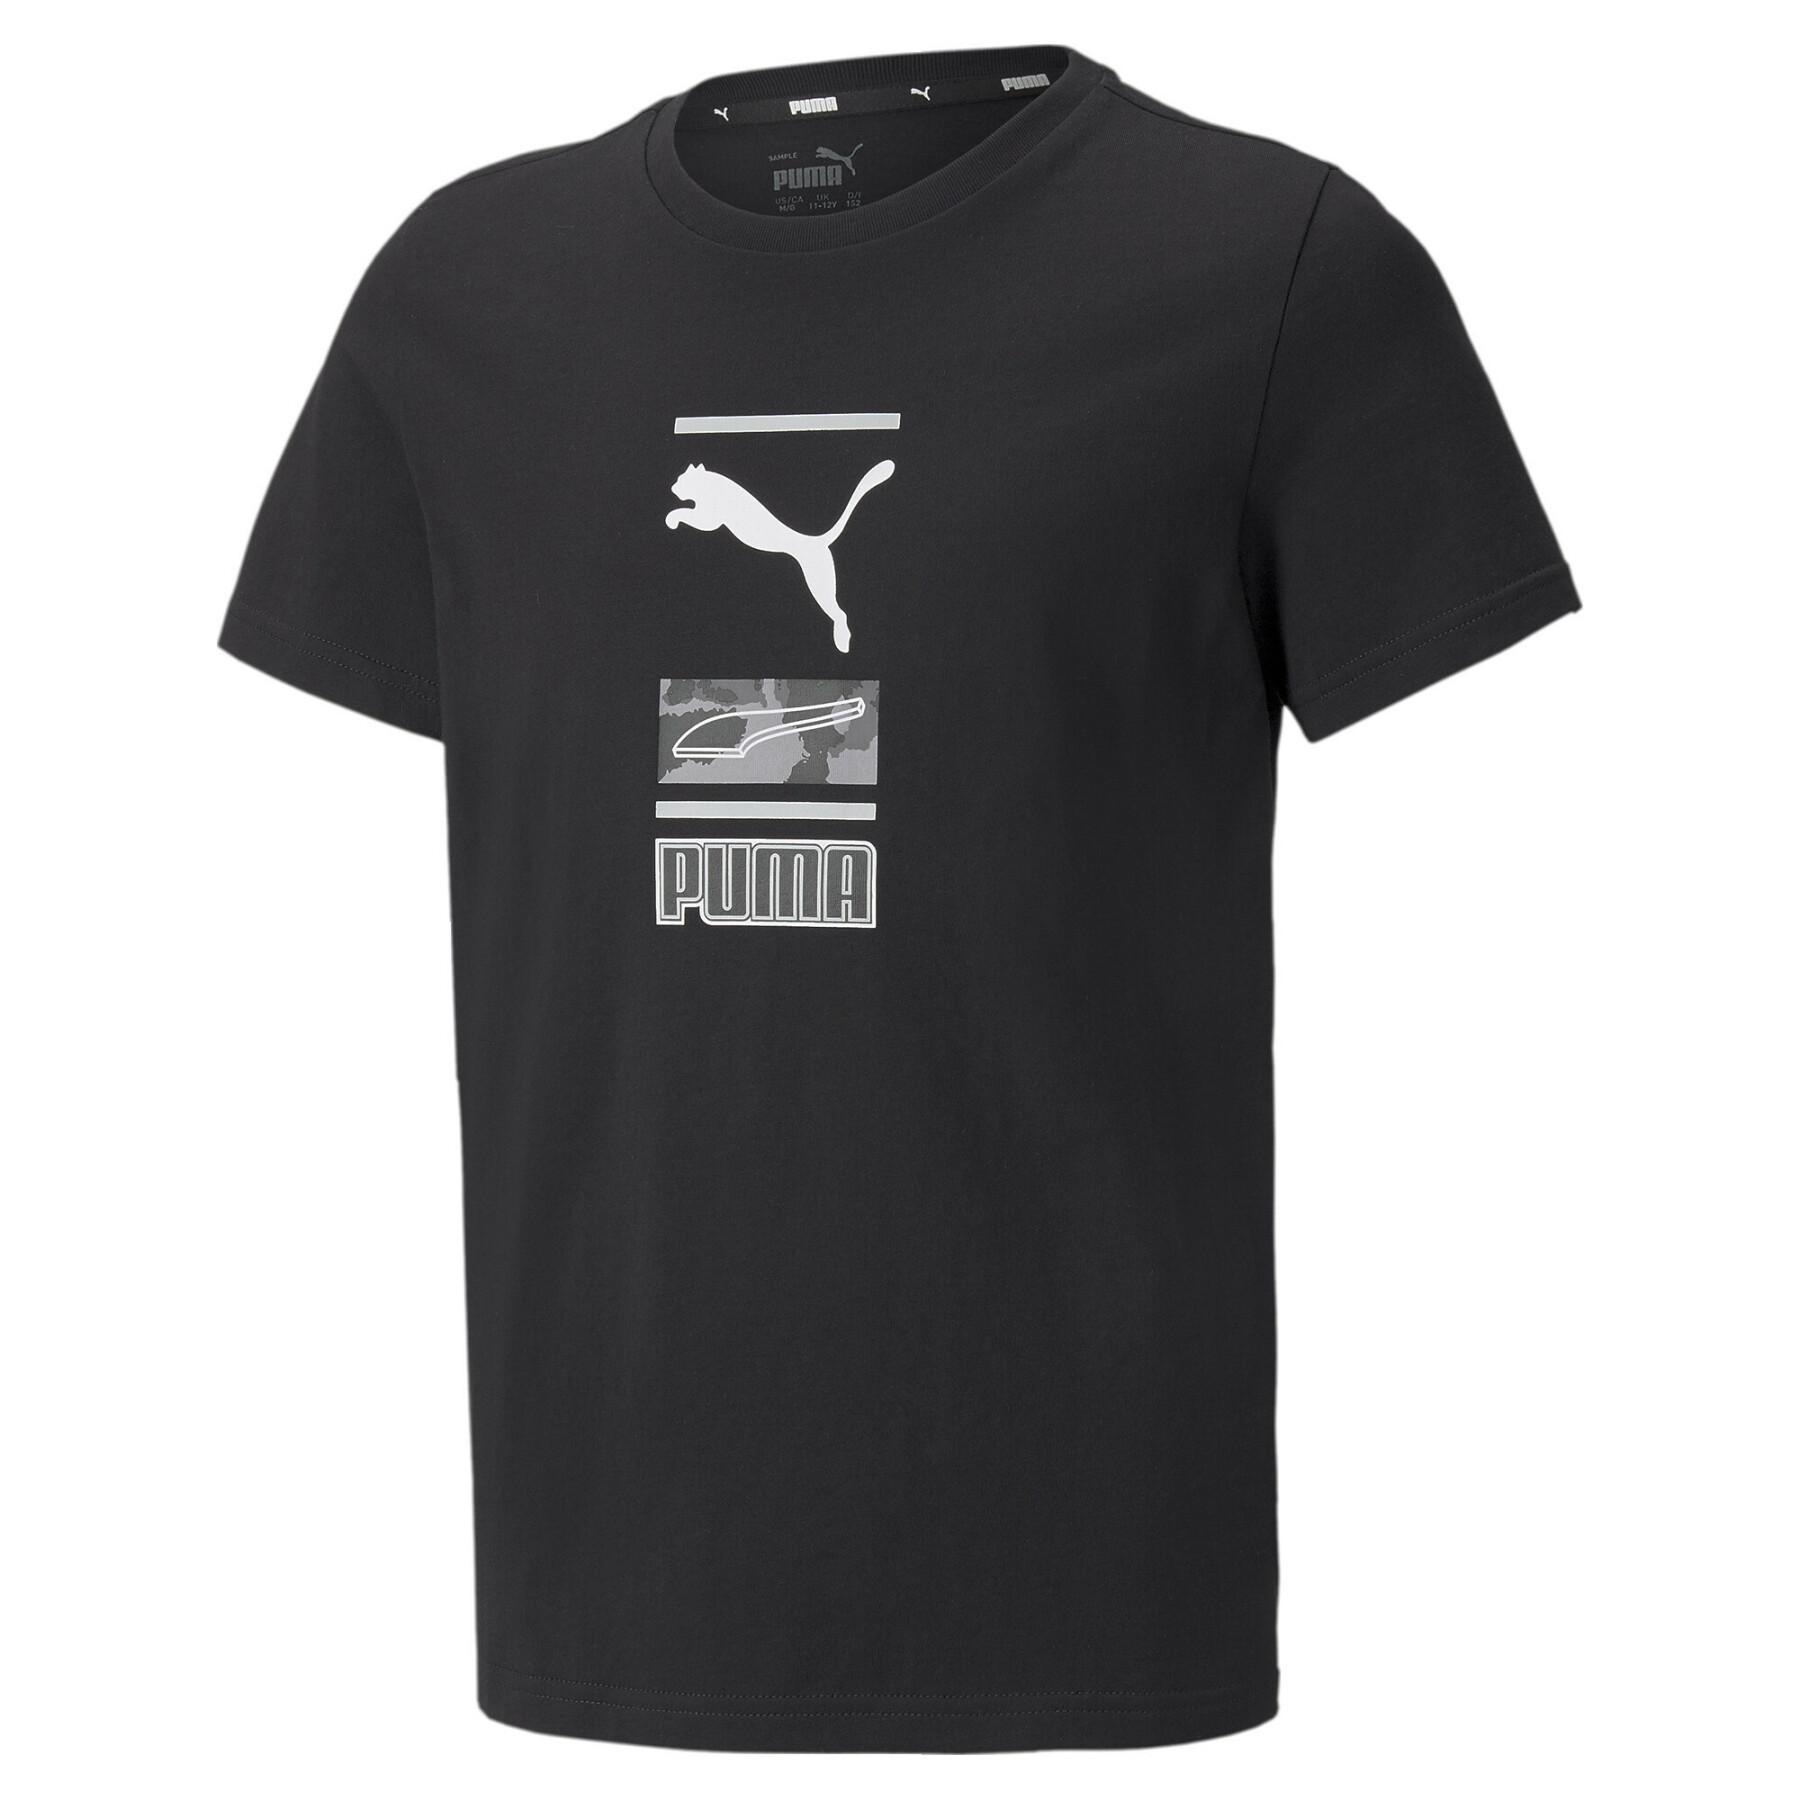 Kinder T-Shirt Puma Alpharaphic